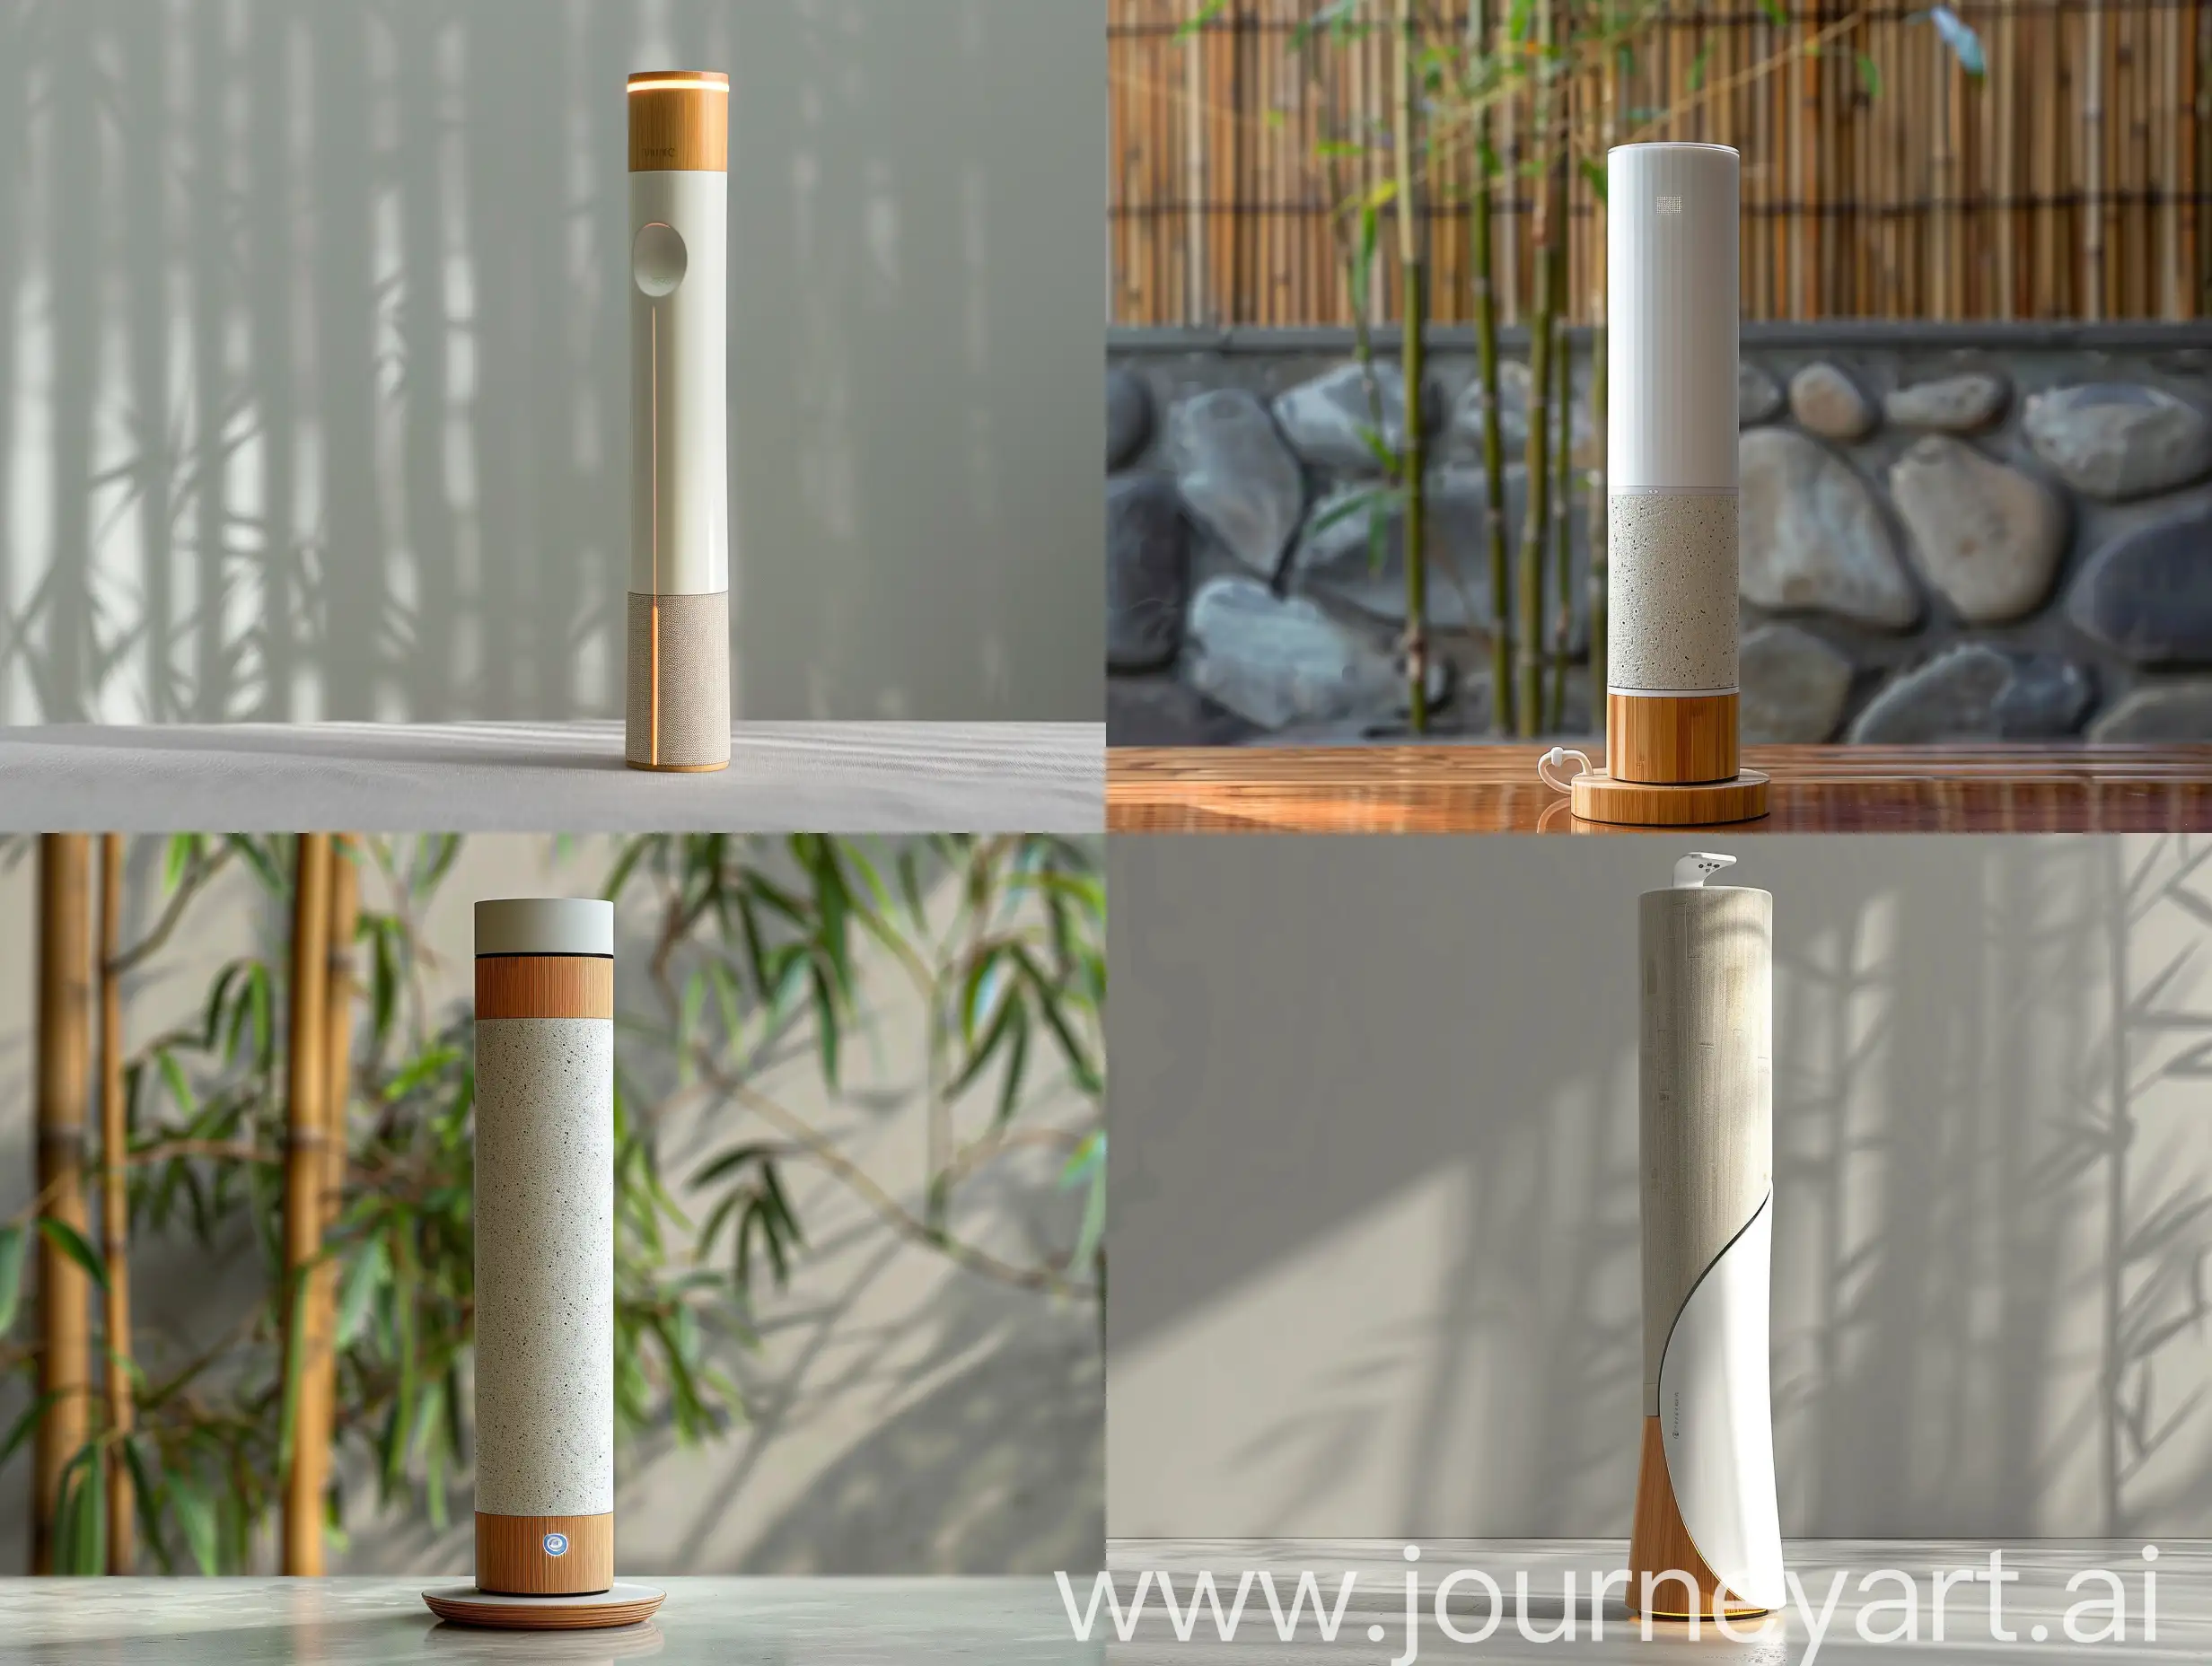 EcoFriendly-Smart-Energy-Management-Device-with-Bamboo-Aesthetics